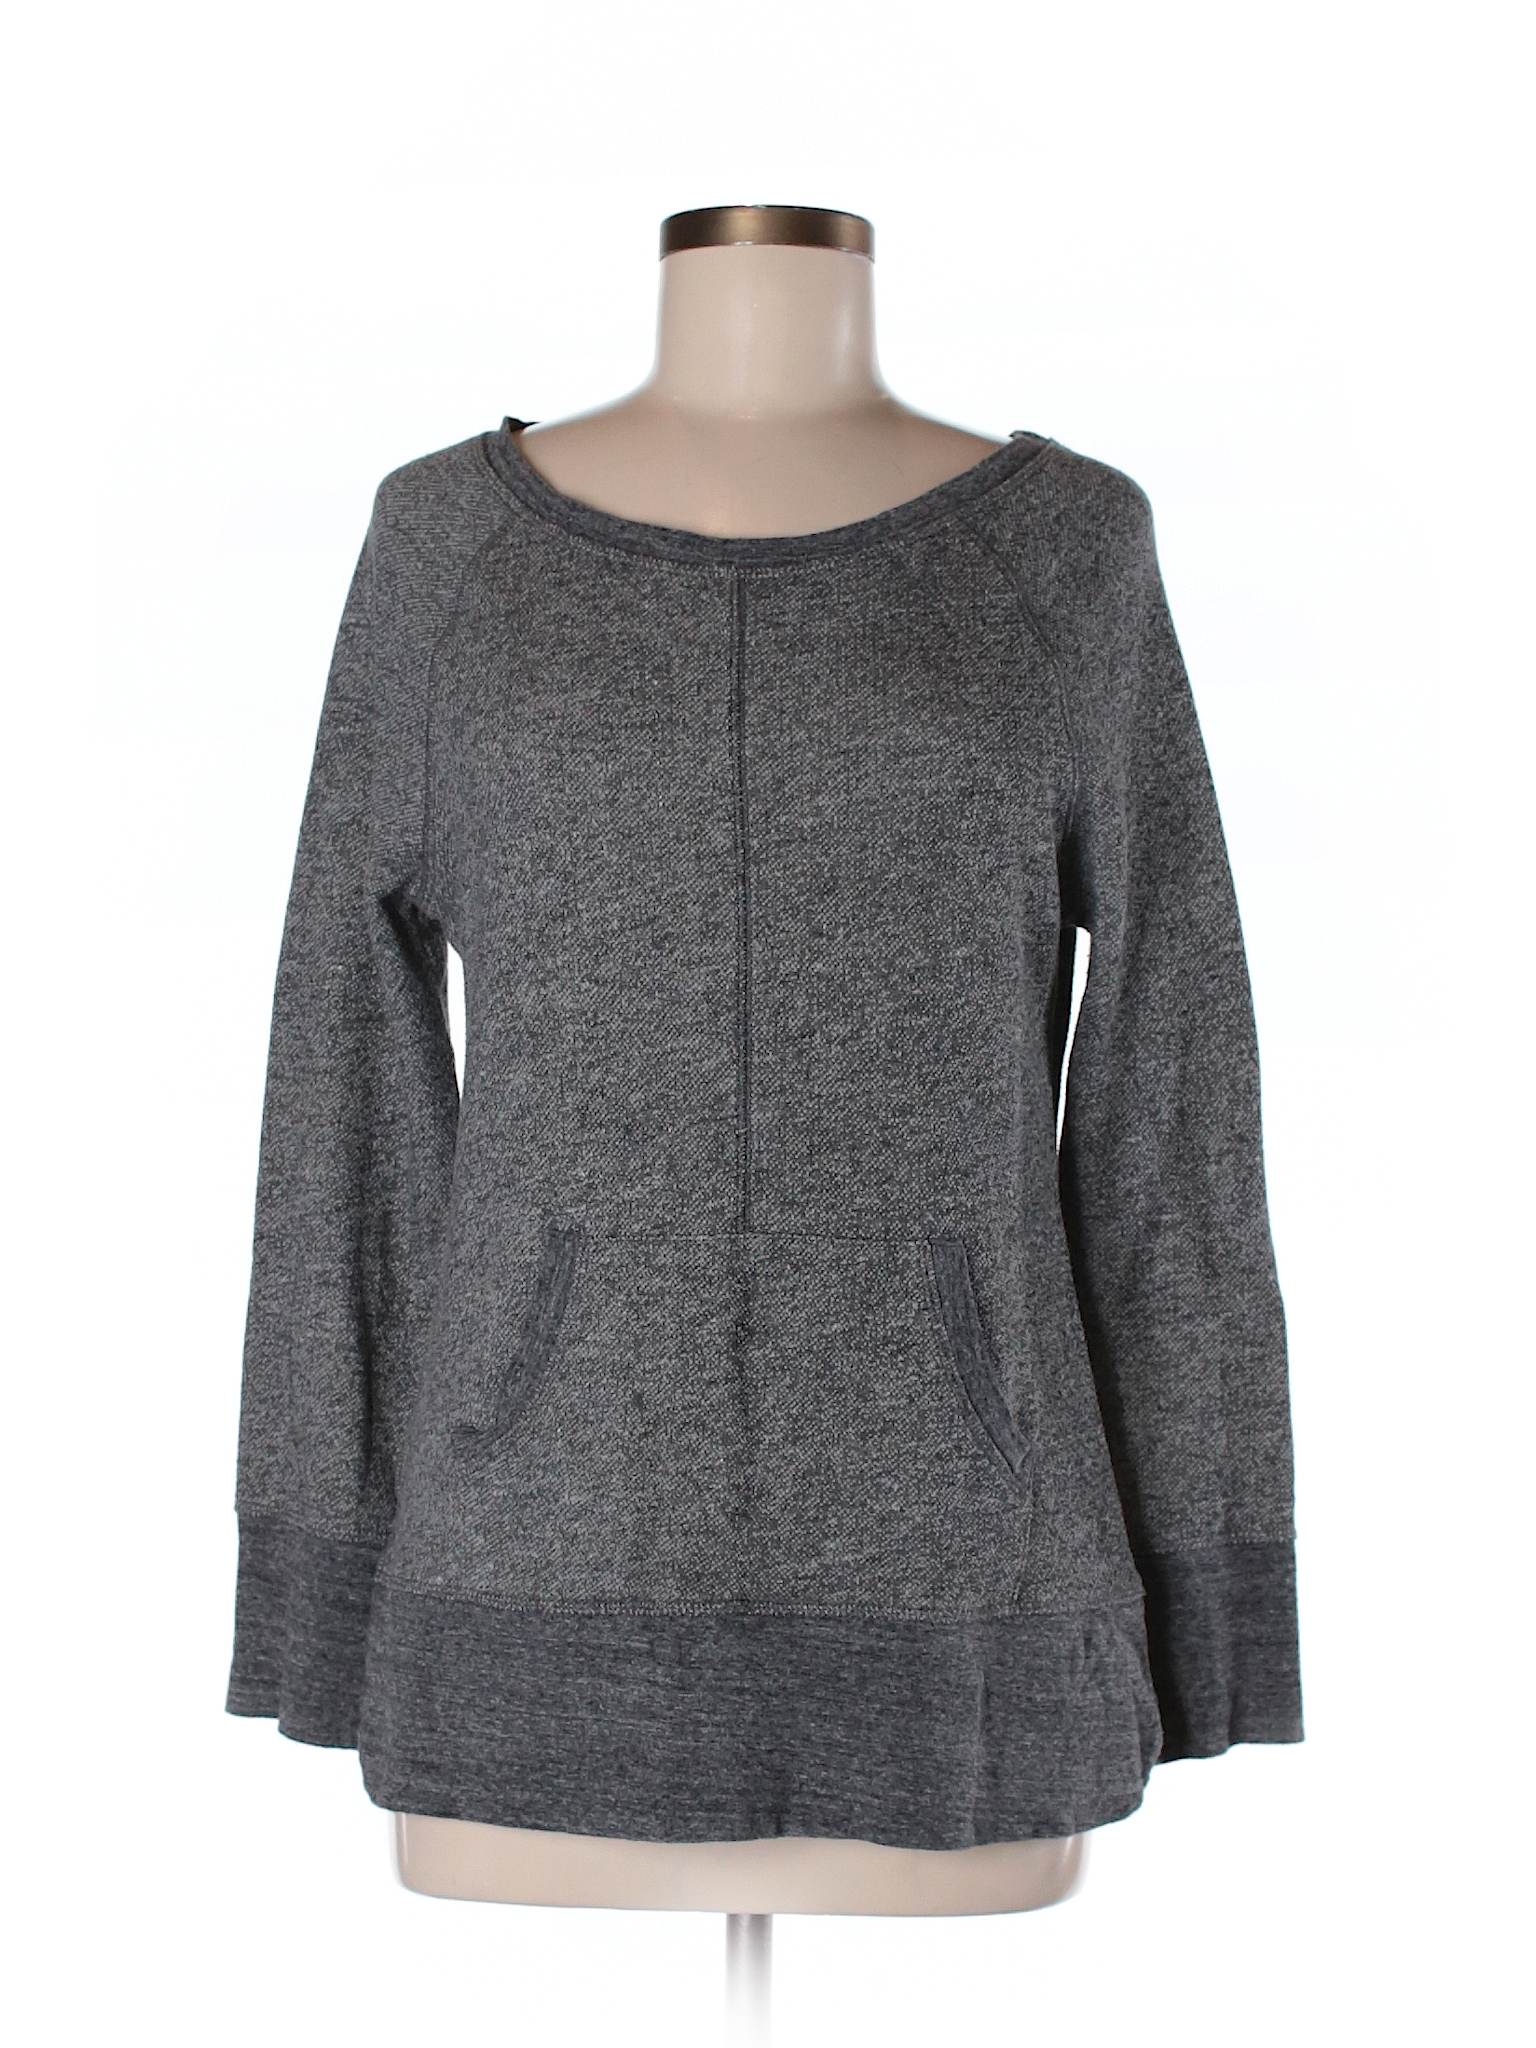 Ann Taylor LOFT Color Block Gray Sweatshirt Size M - 71% off | thredUP